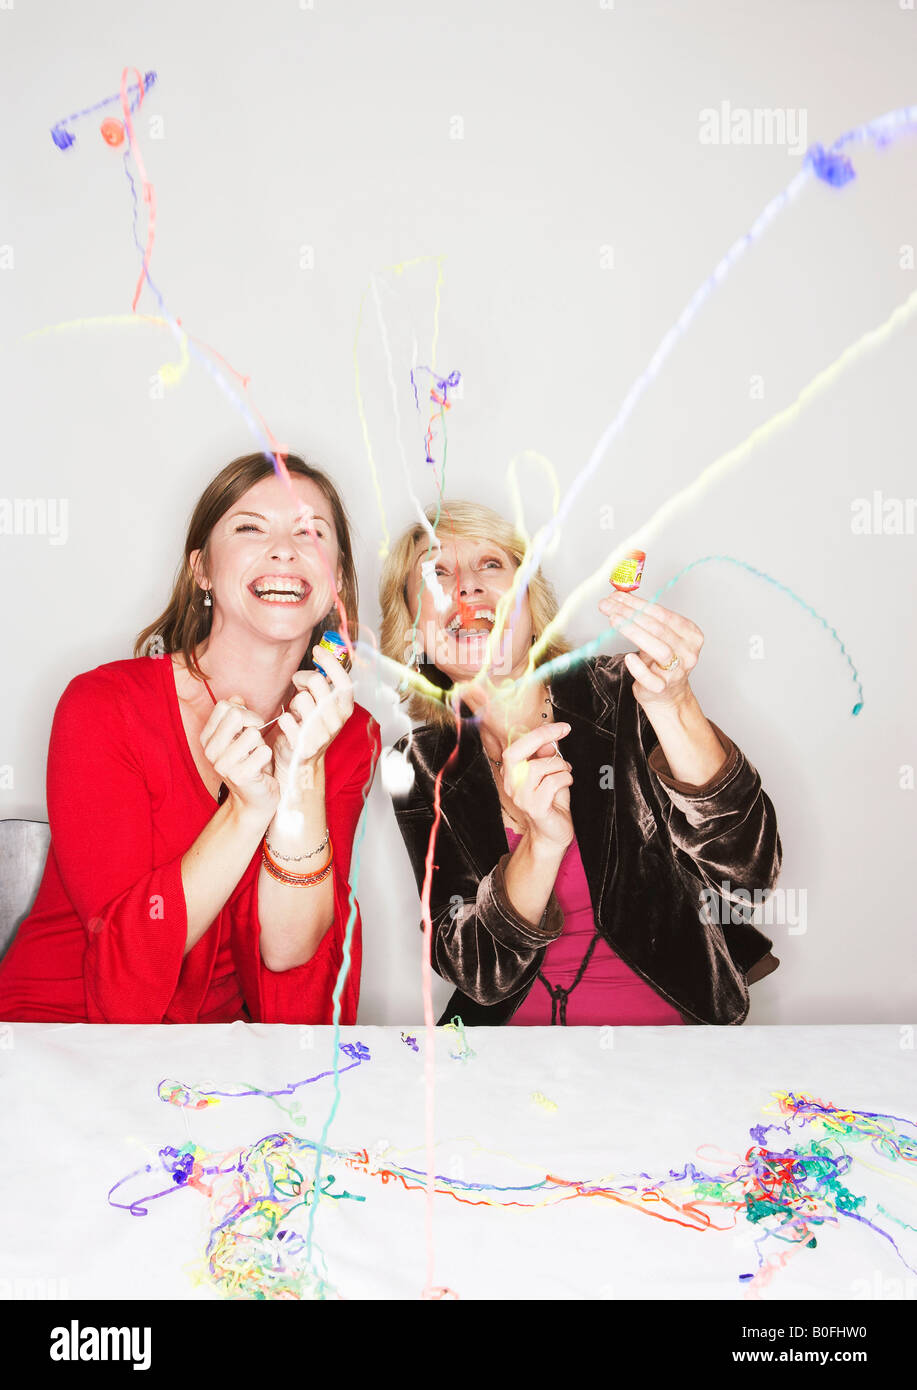 Zwei Frauen mit Party poppers Stockfoto